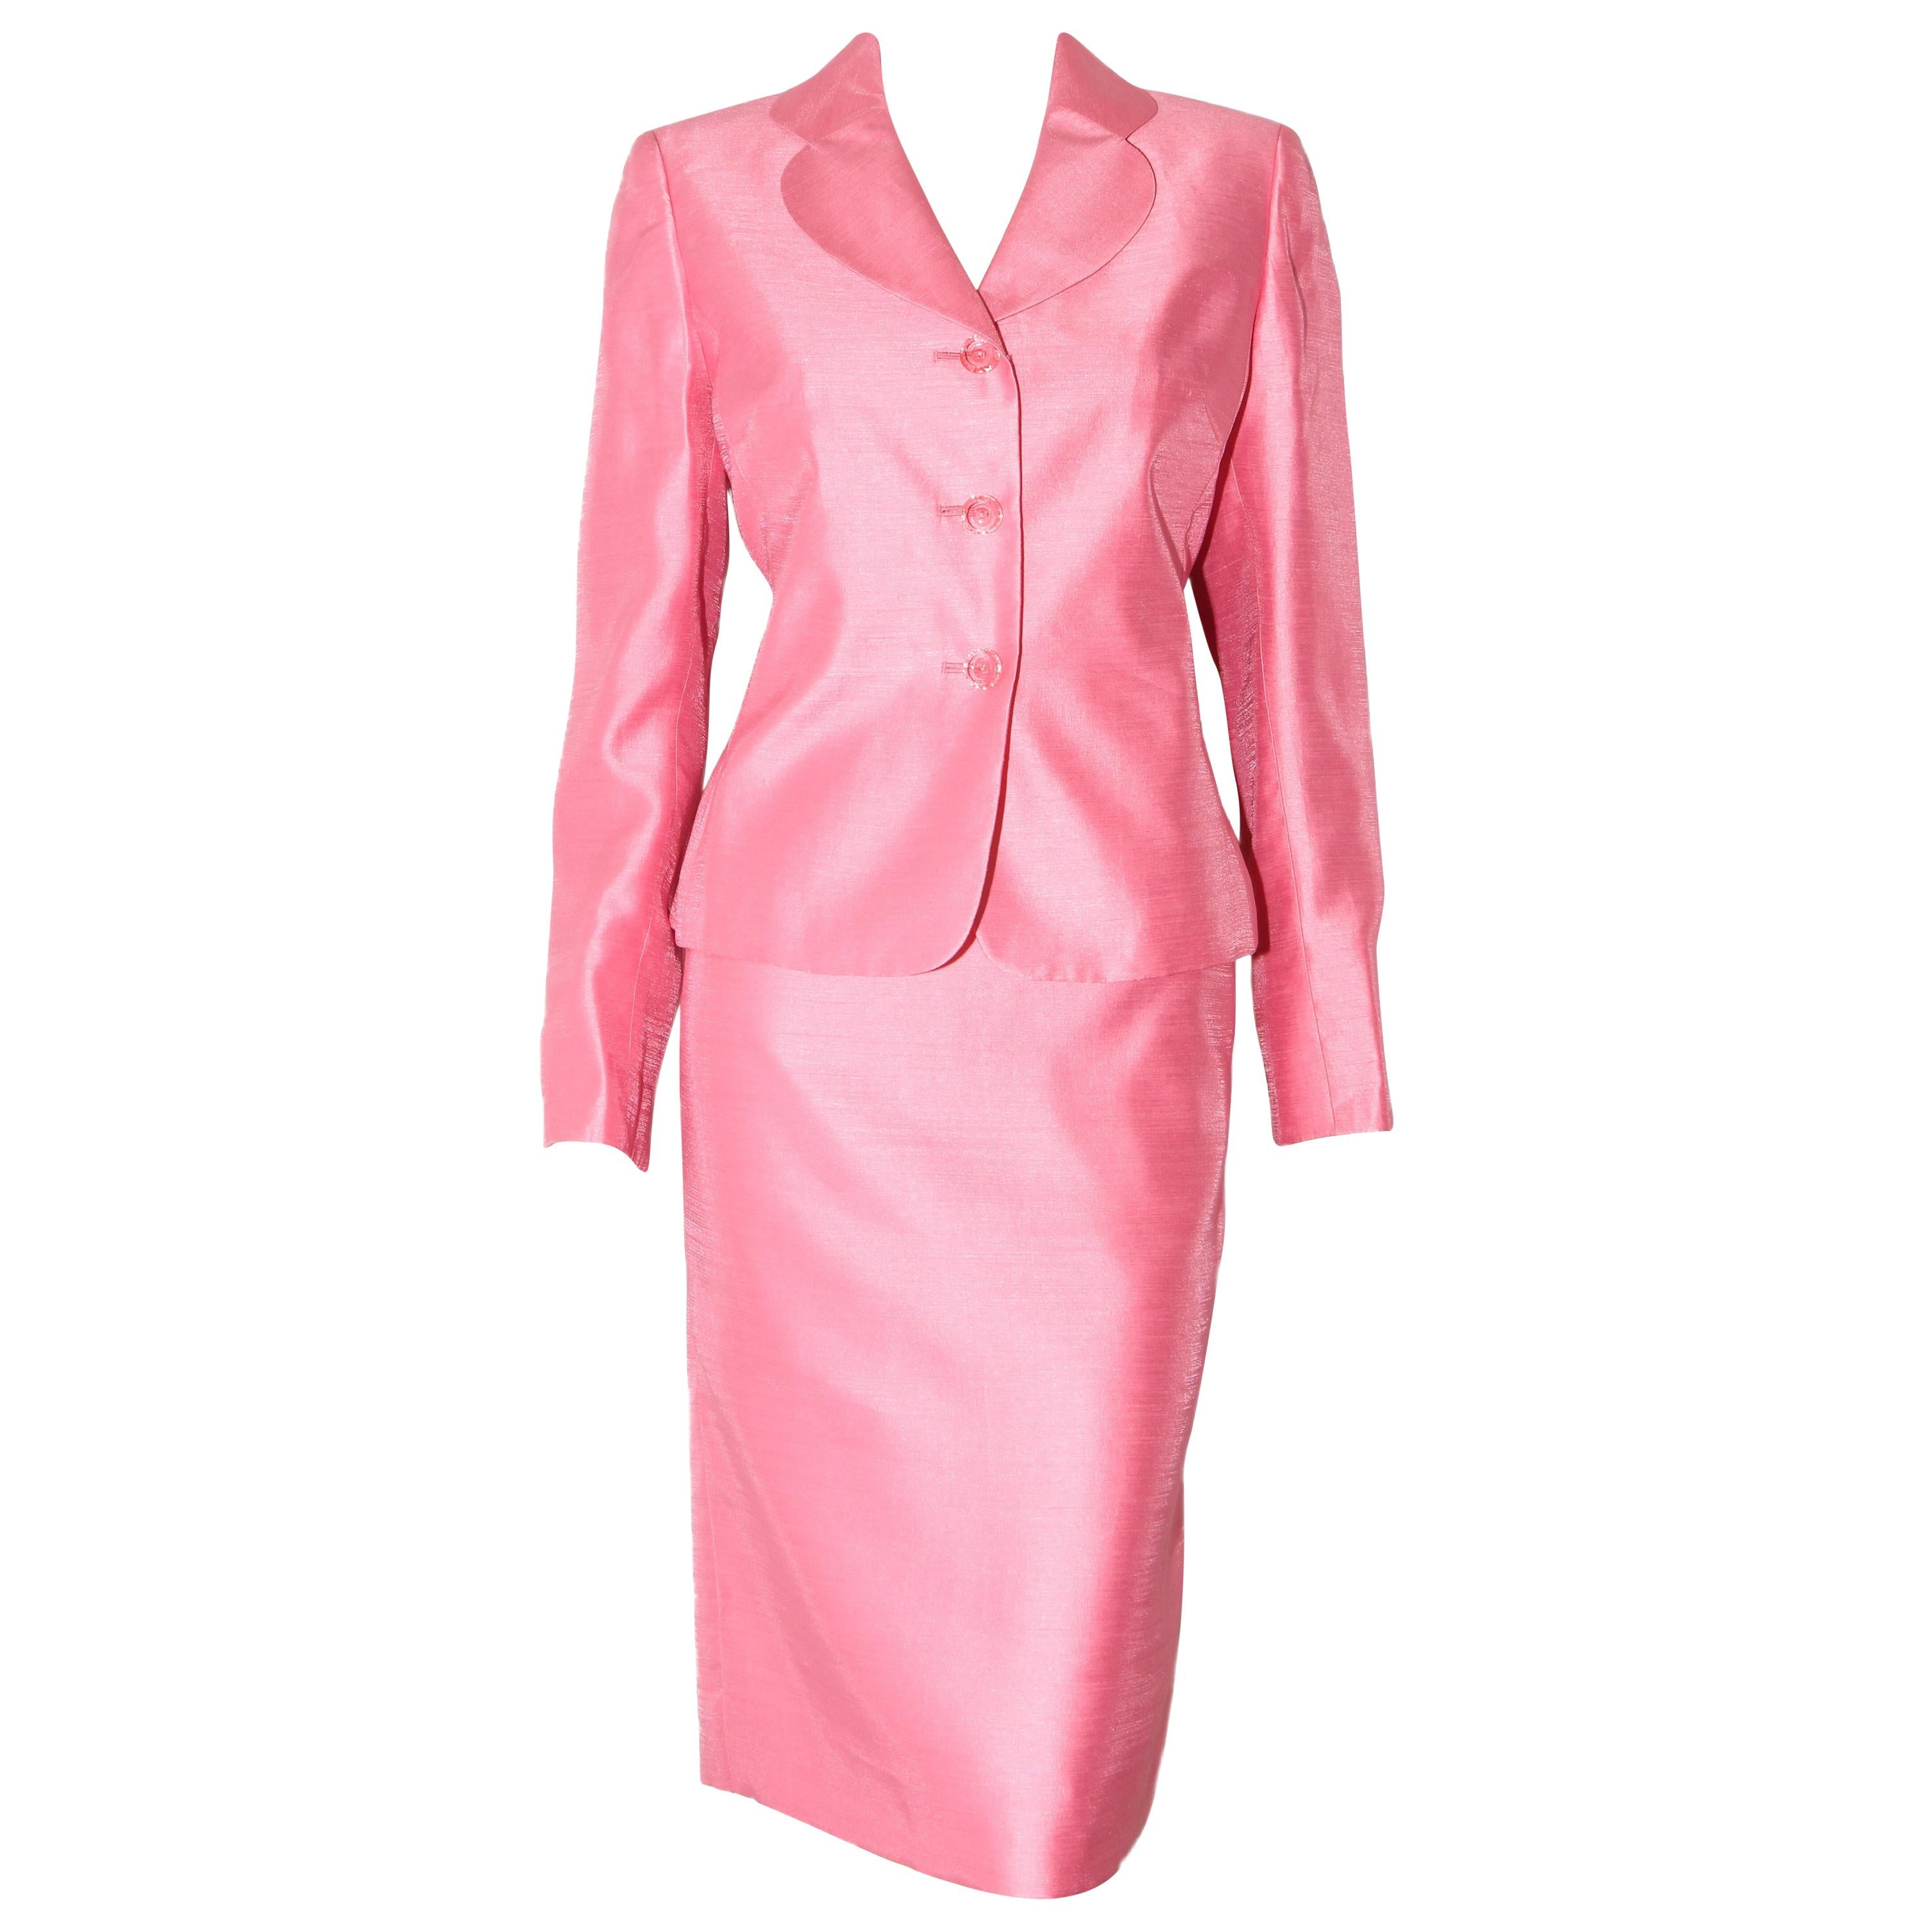 Prada Primavera Pink Blossom Skirt Suit For Sale